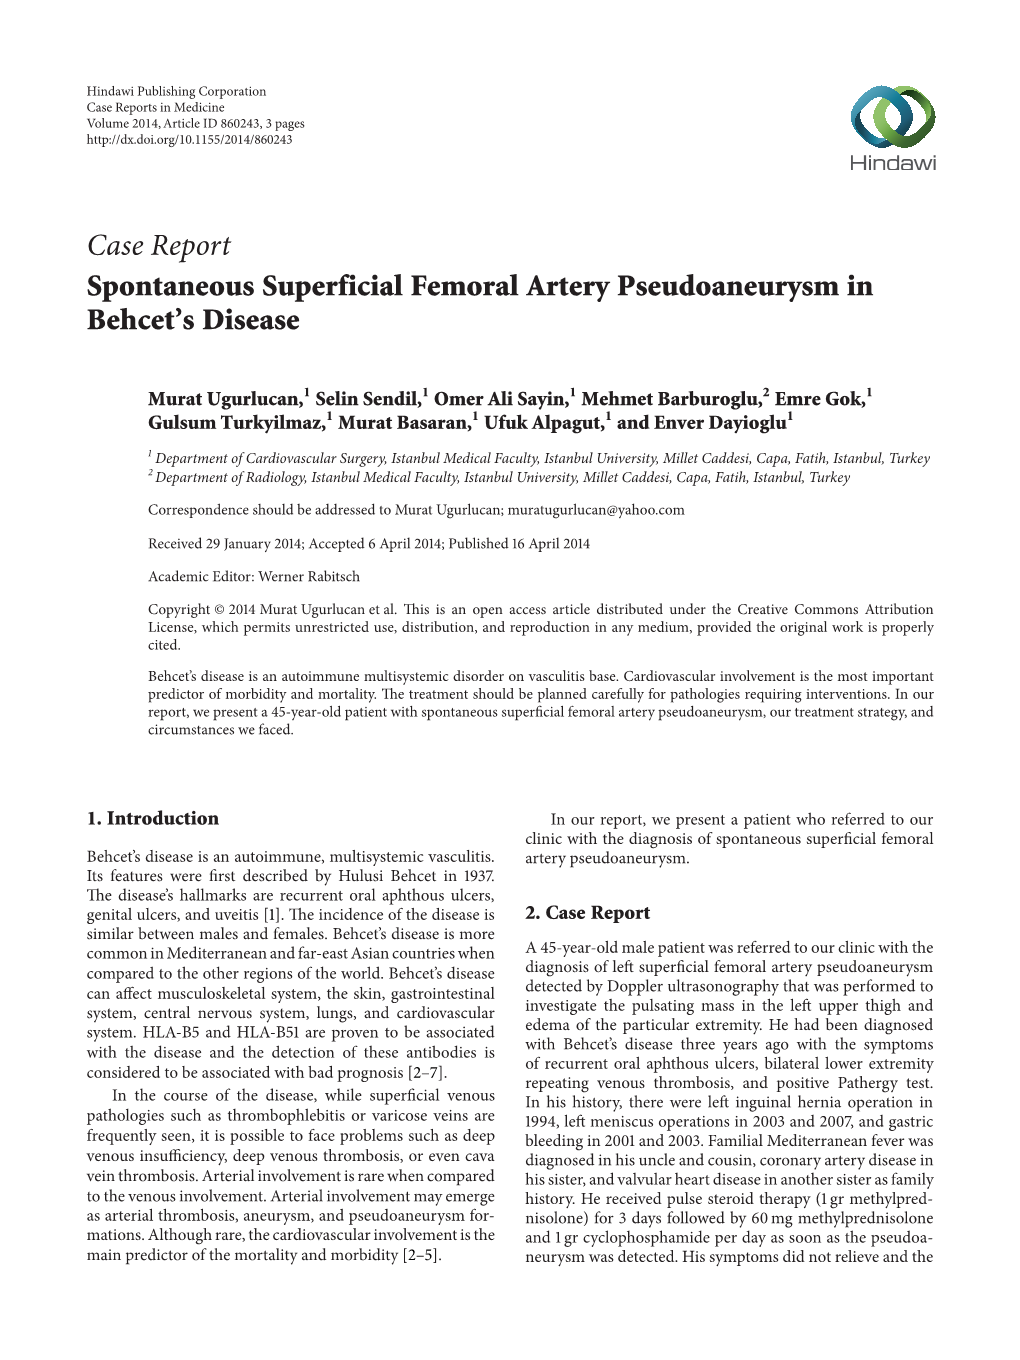 Spontaneous Superficial Femoral Artery Pseudoaneurysm in Behcet's Disease